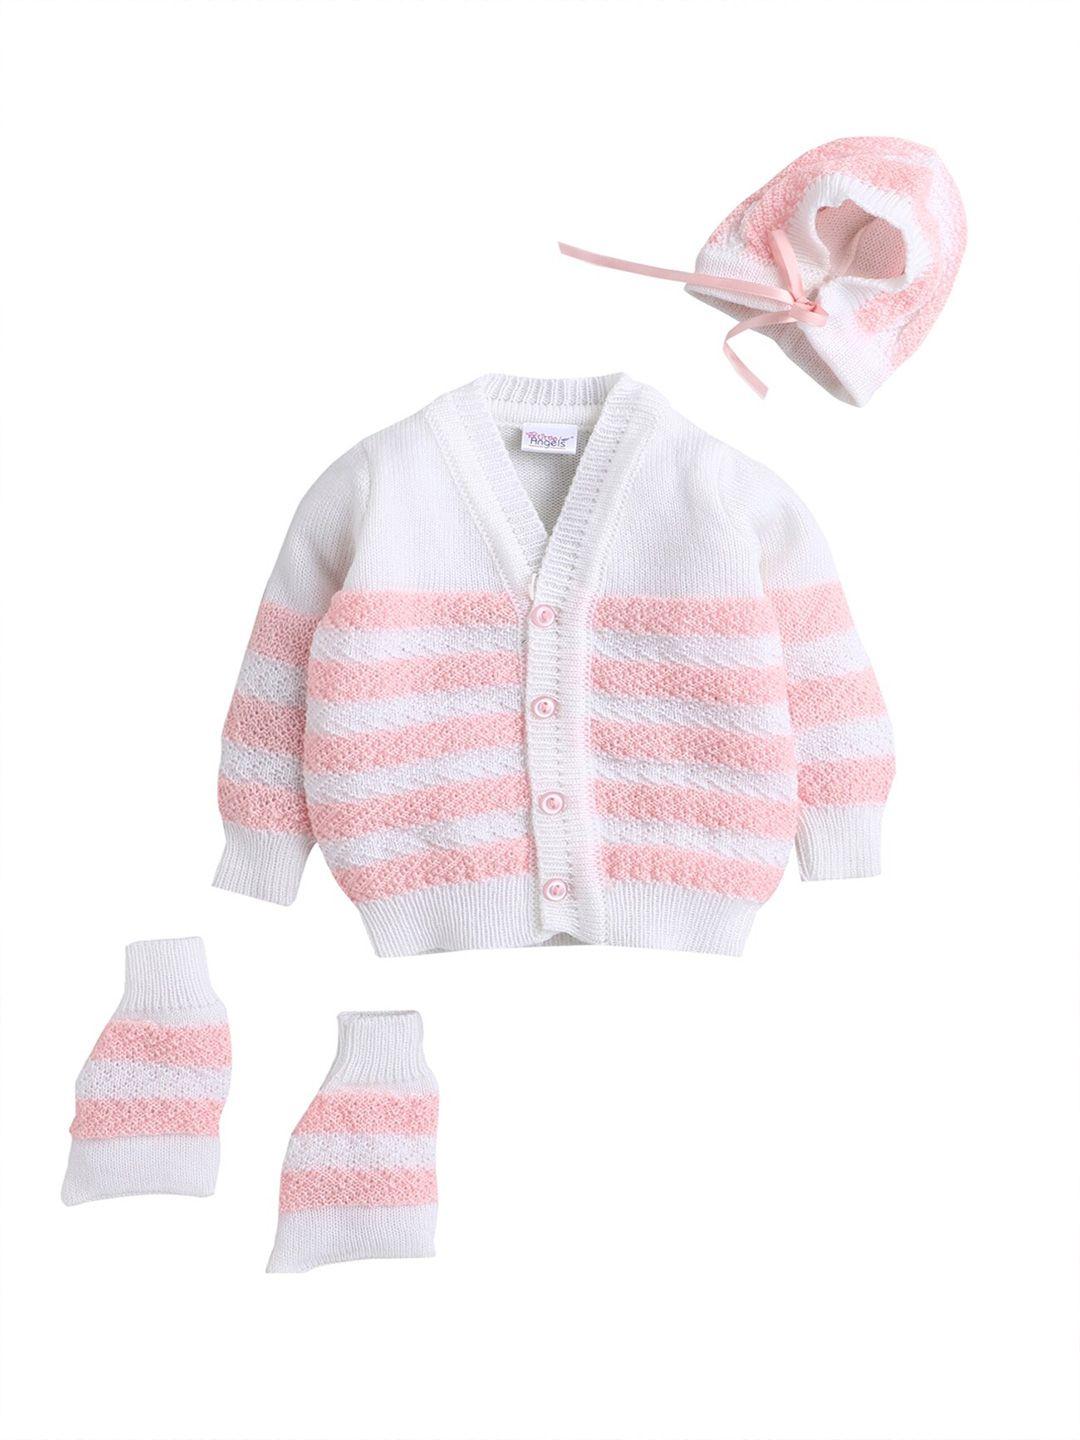 little-angels-unisex-kids-white-&-pink-striped-cardigan